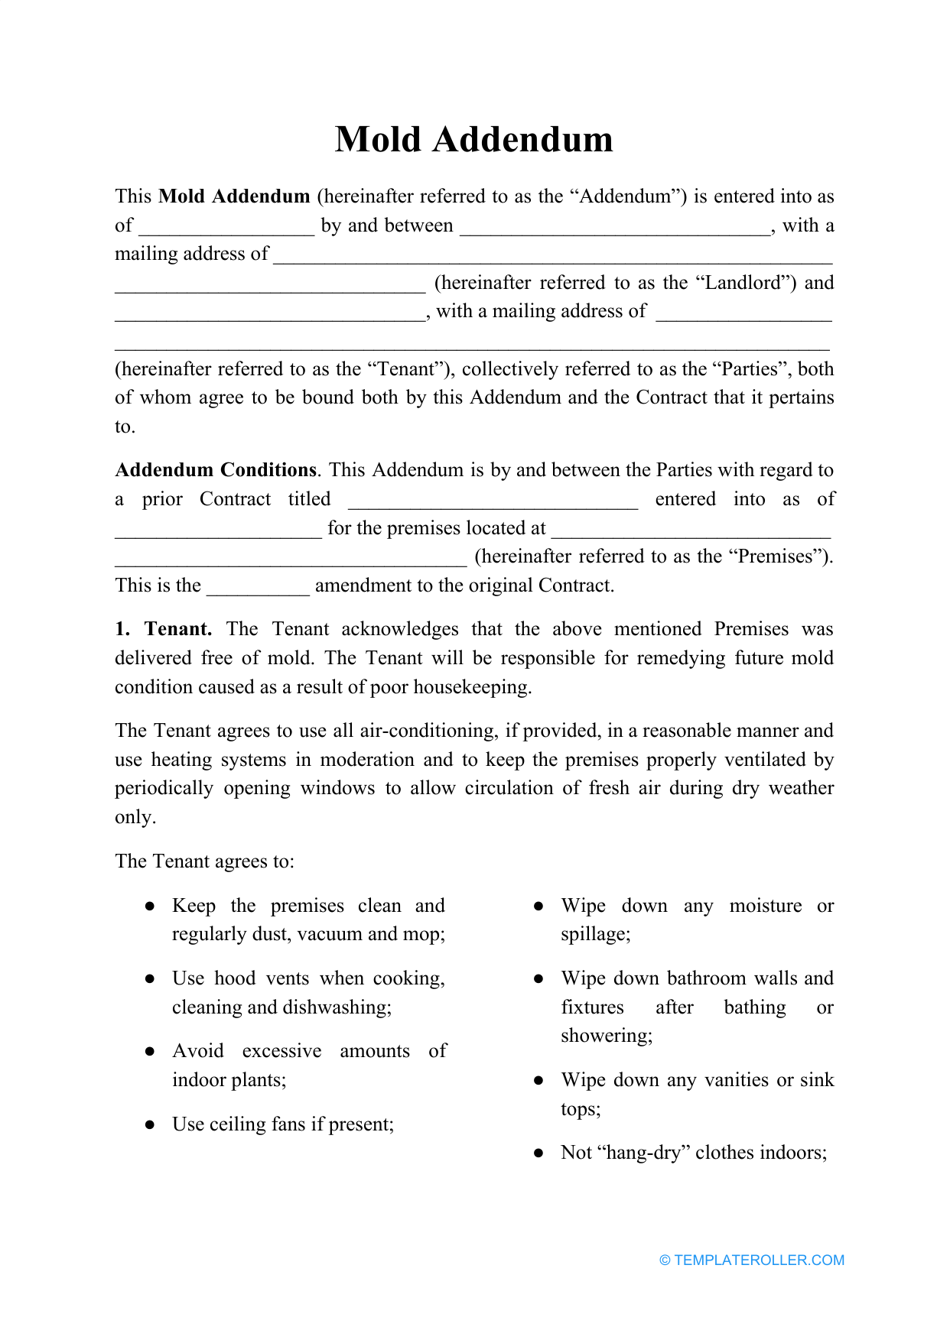 Mold Addendum Template, Page 1